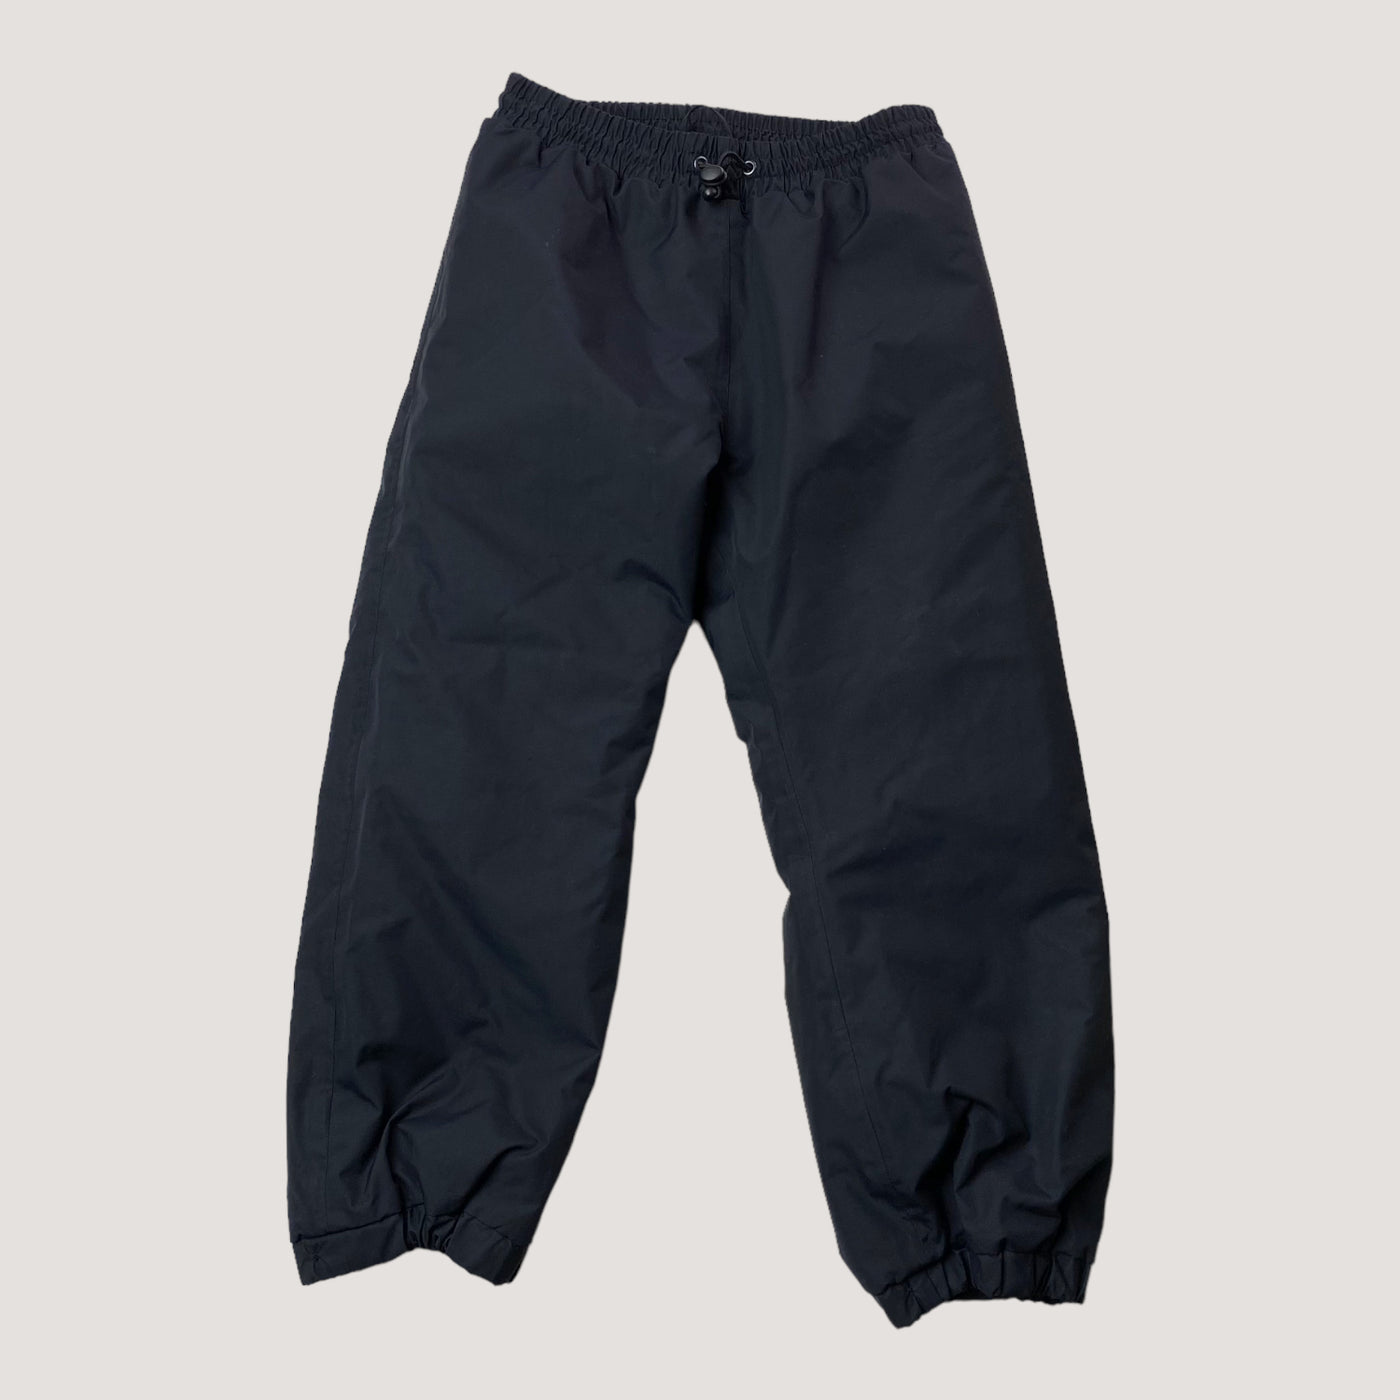 Molo heat basic active winter pants, black | 116cm